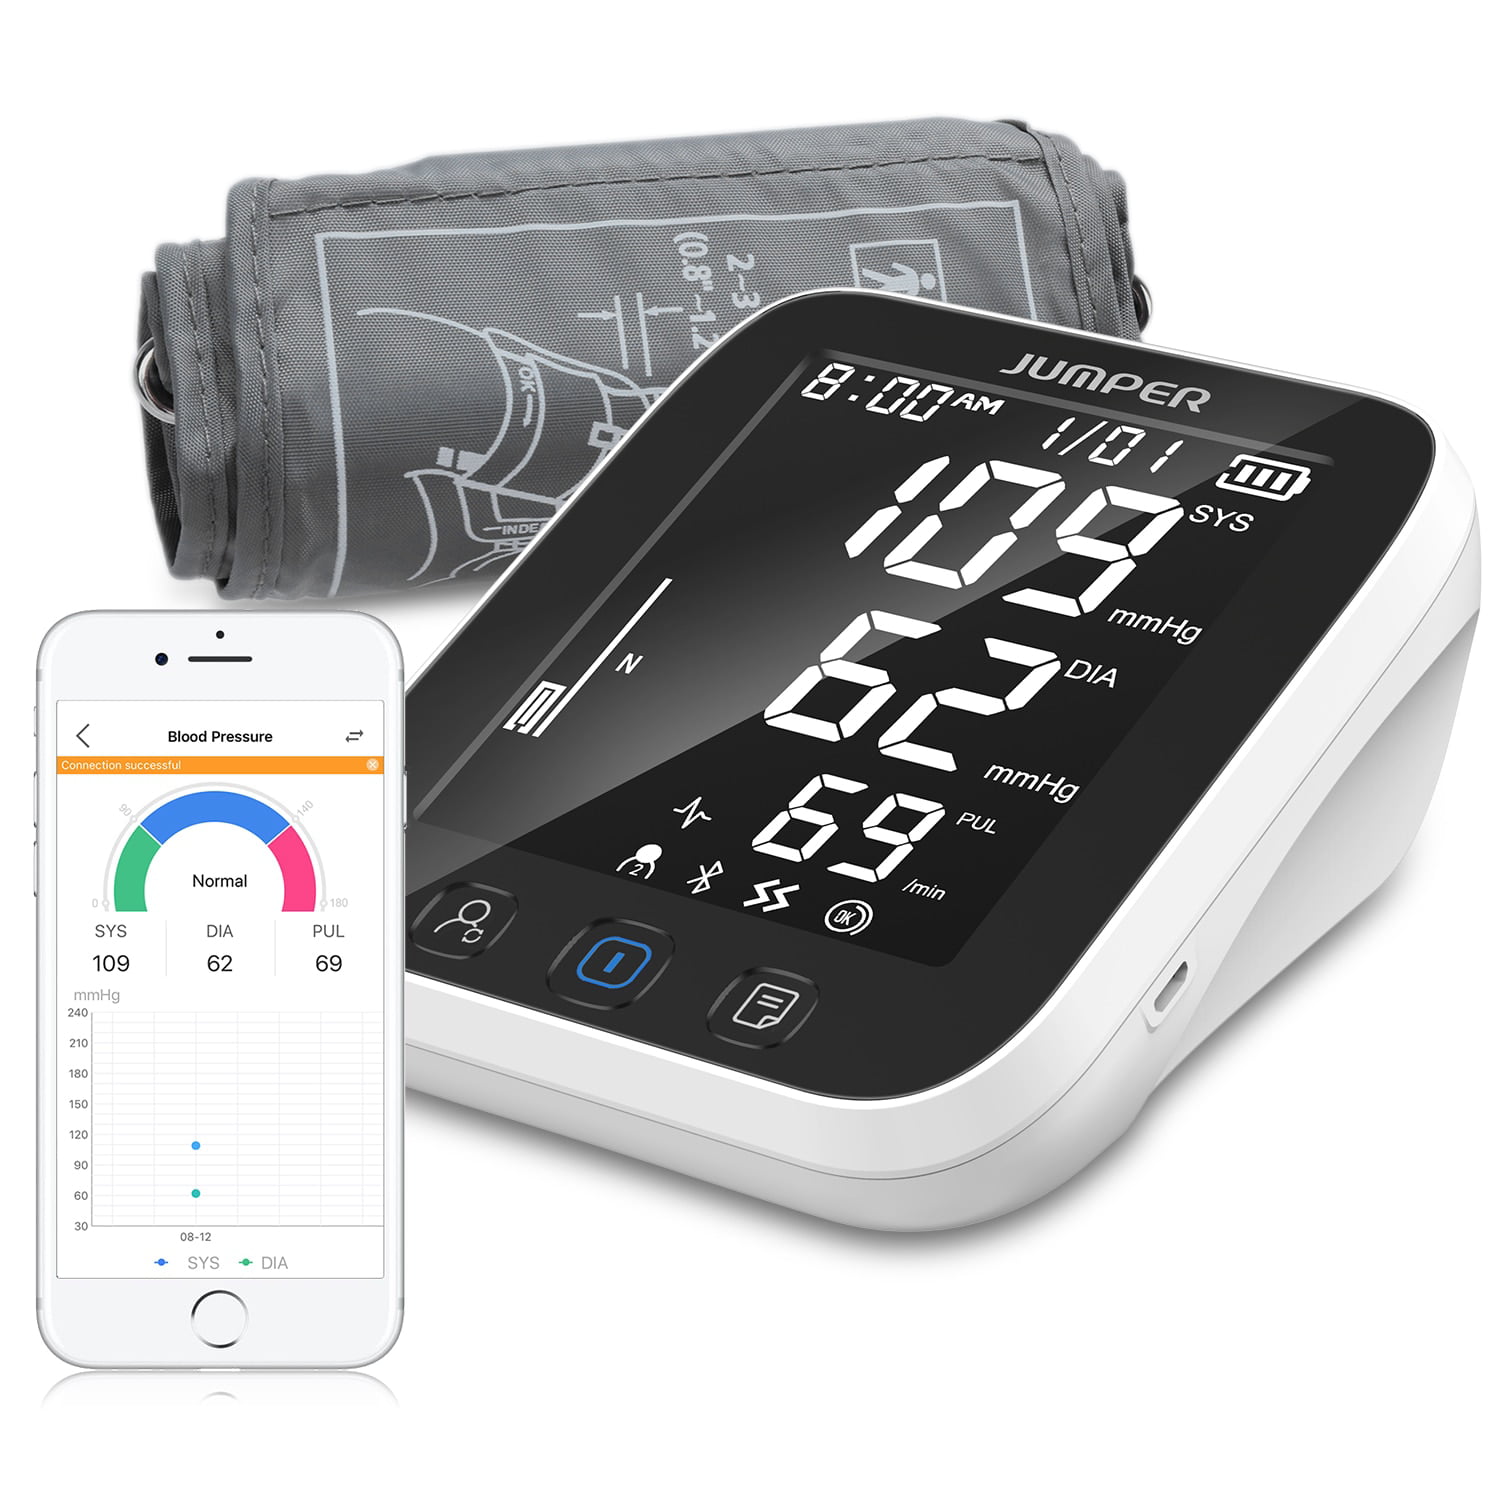 Lazle Automatic Blood Pressure Monitor Model JPD-HA101